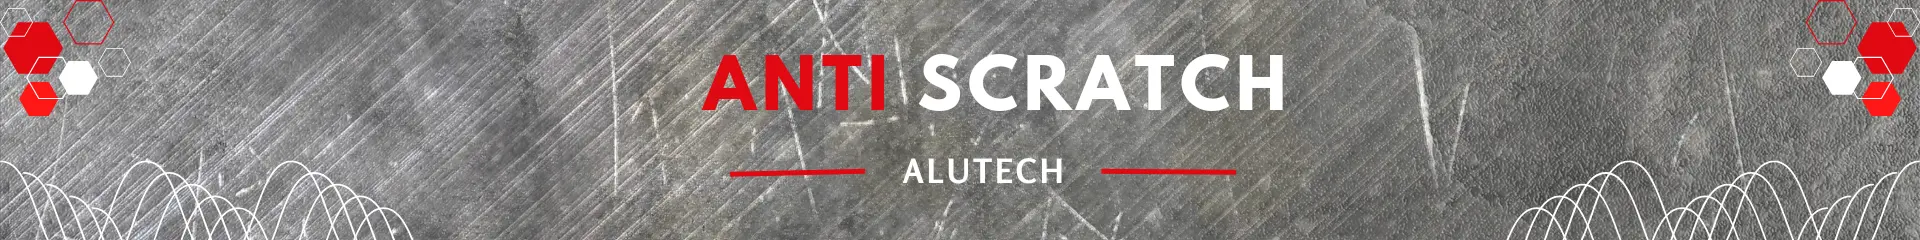 Alutech Anti Scratch Banner Image